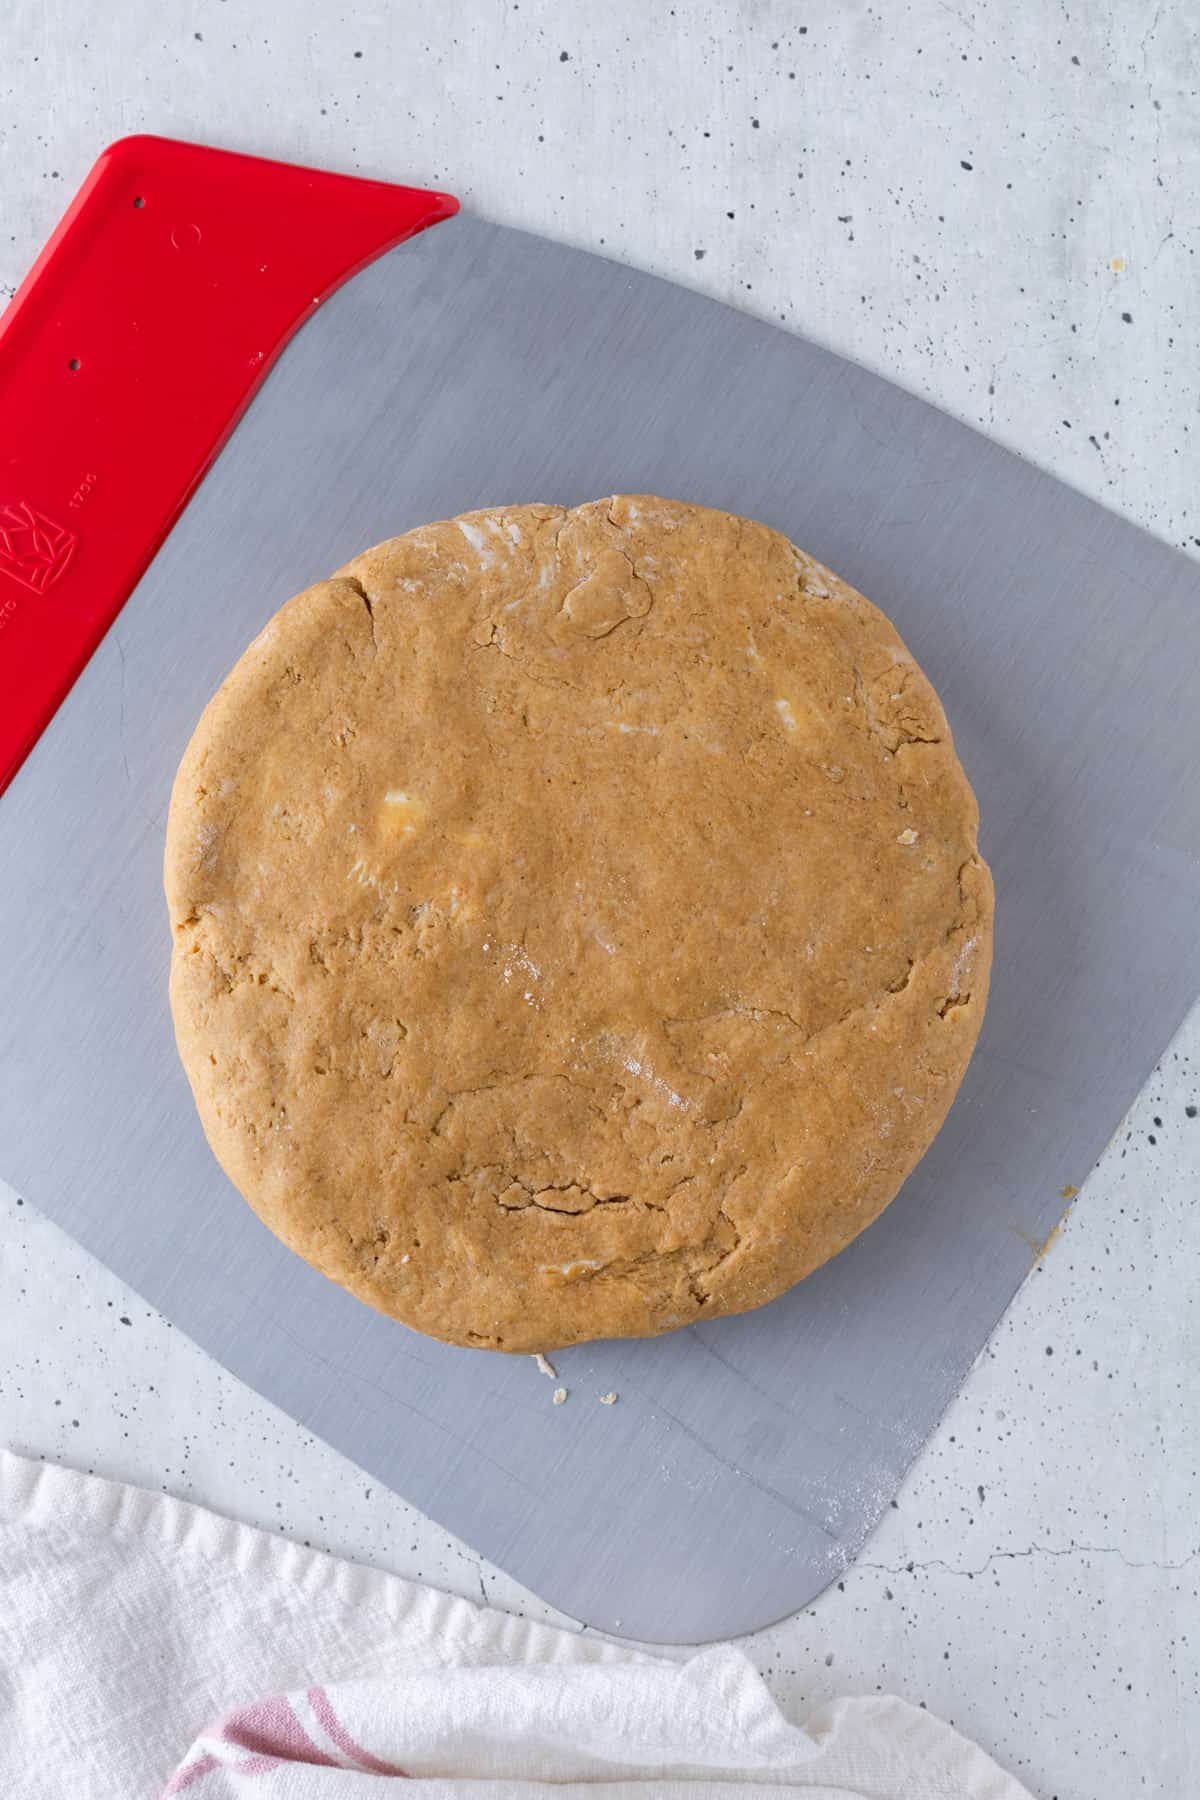 A disk of scone dough.